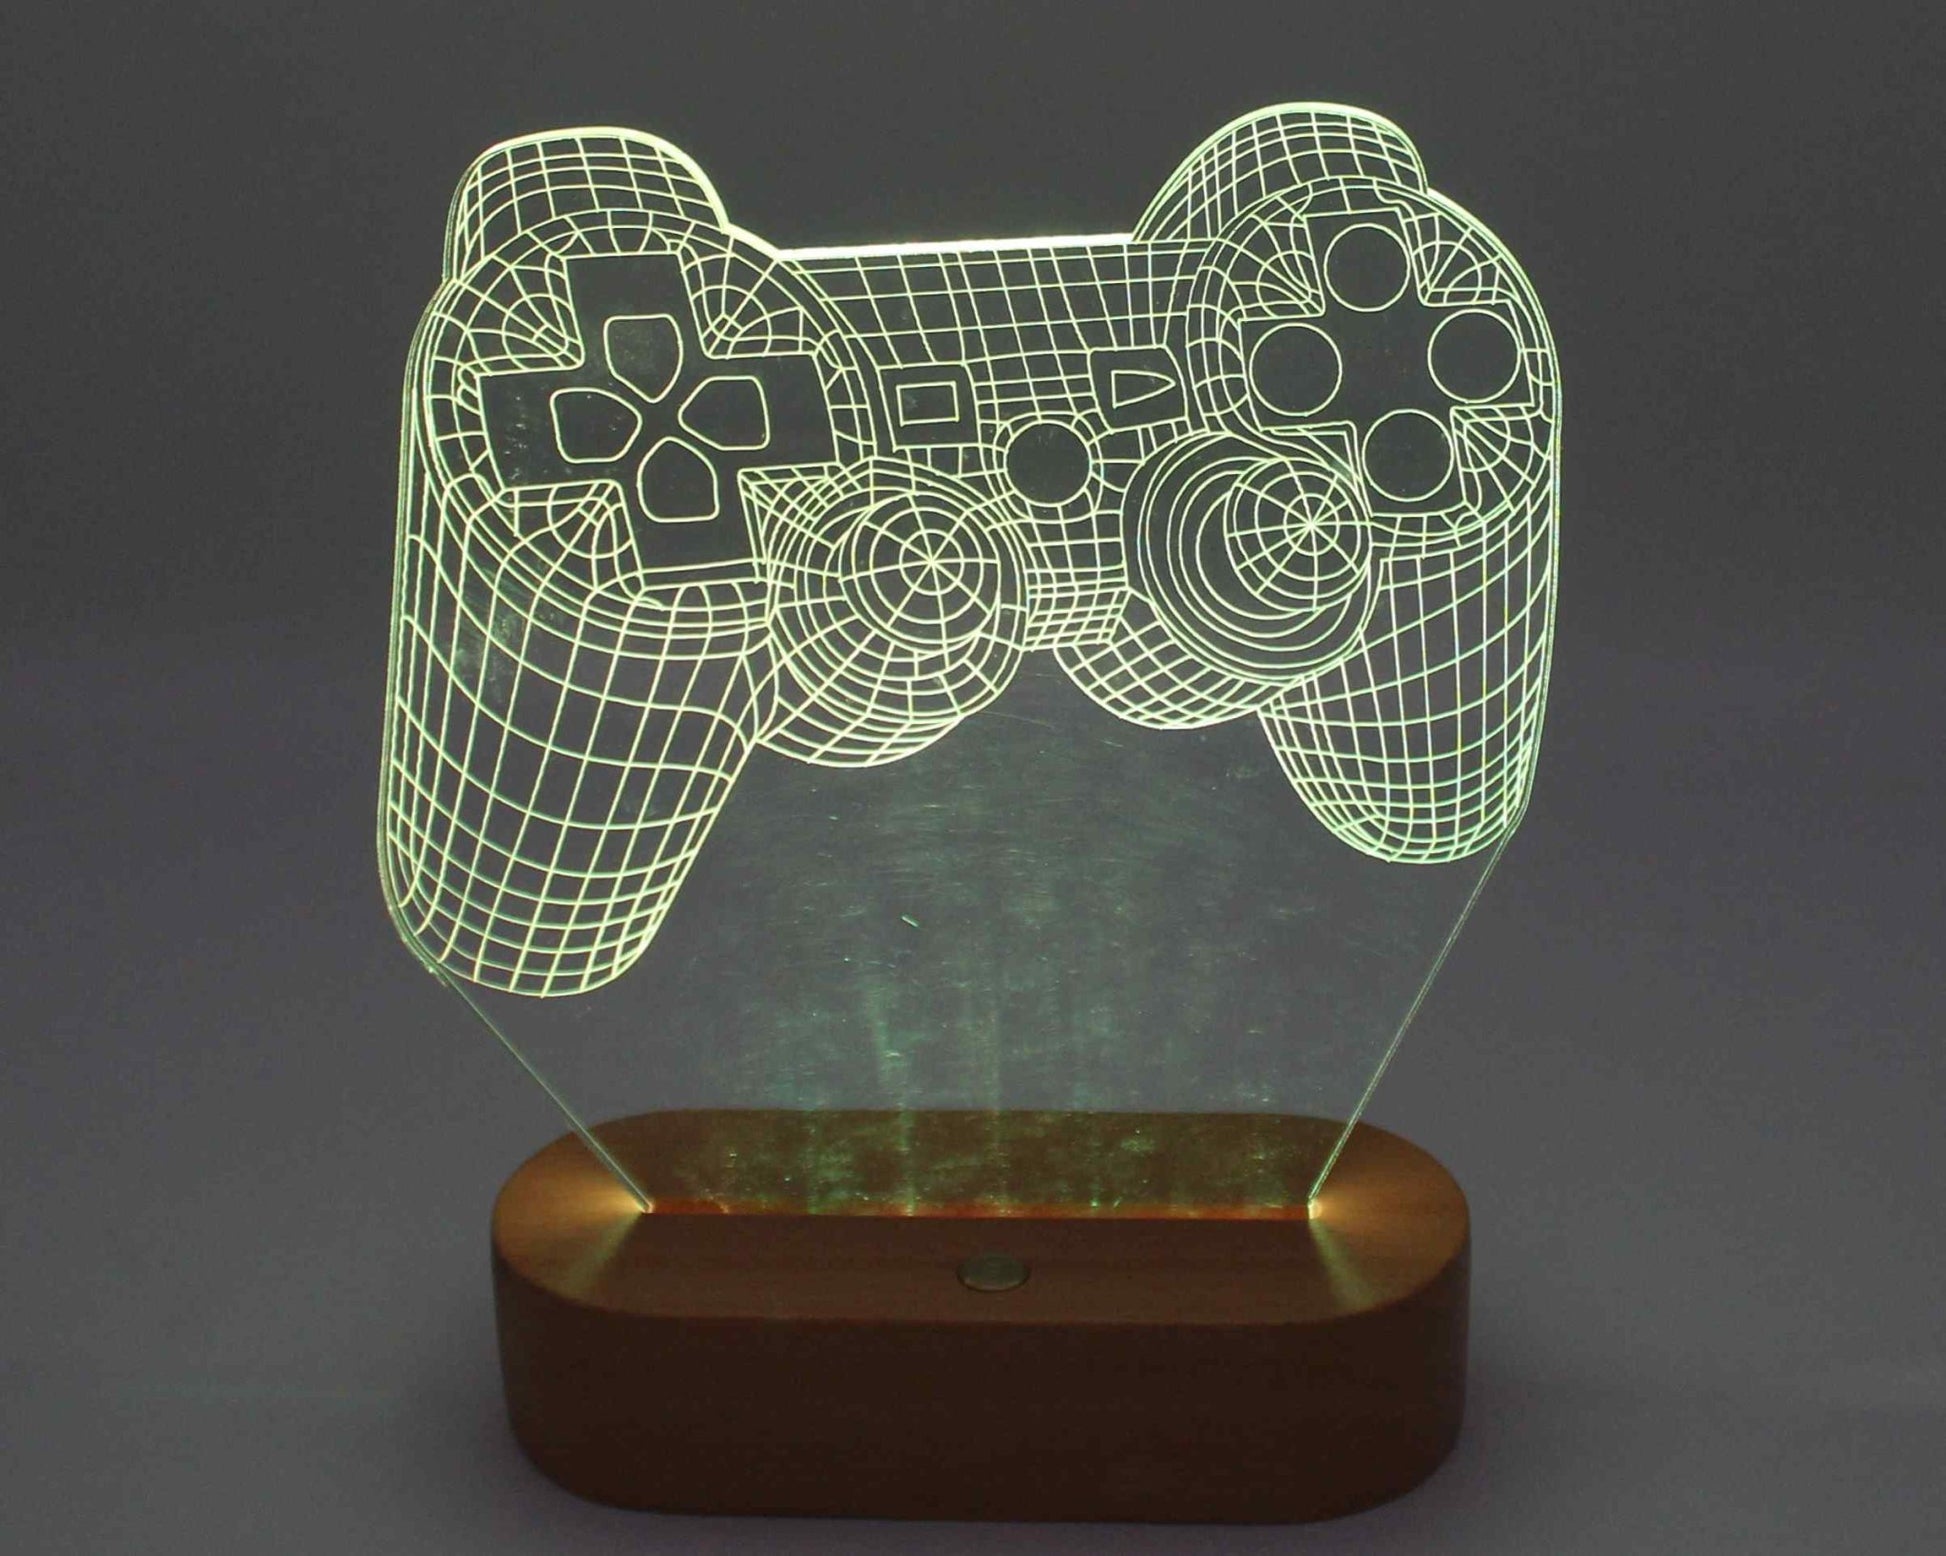 PlayStation controller 3D Illusion Night Light - Haisley Design